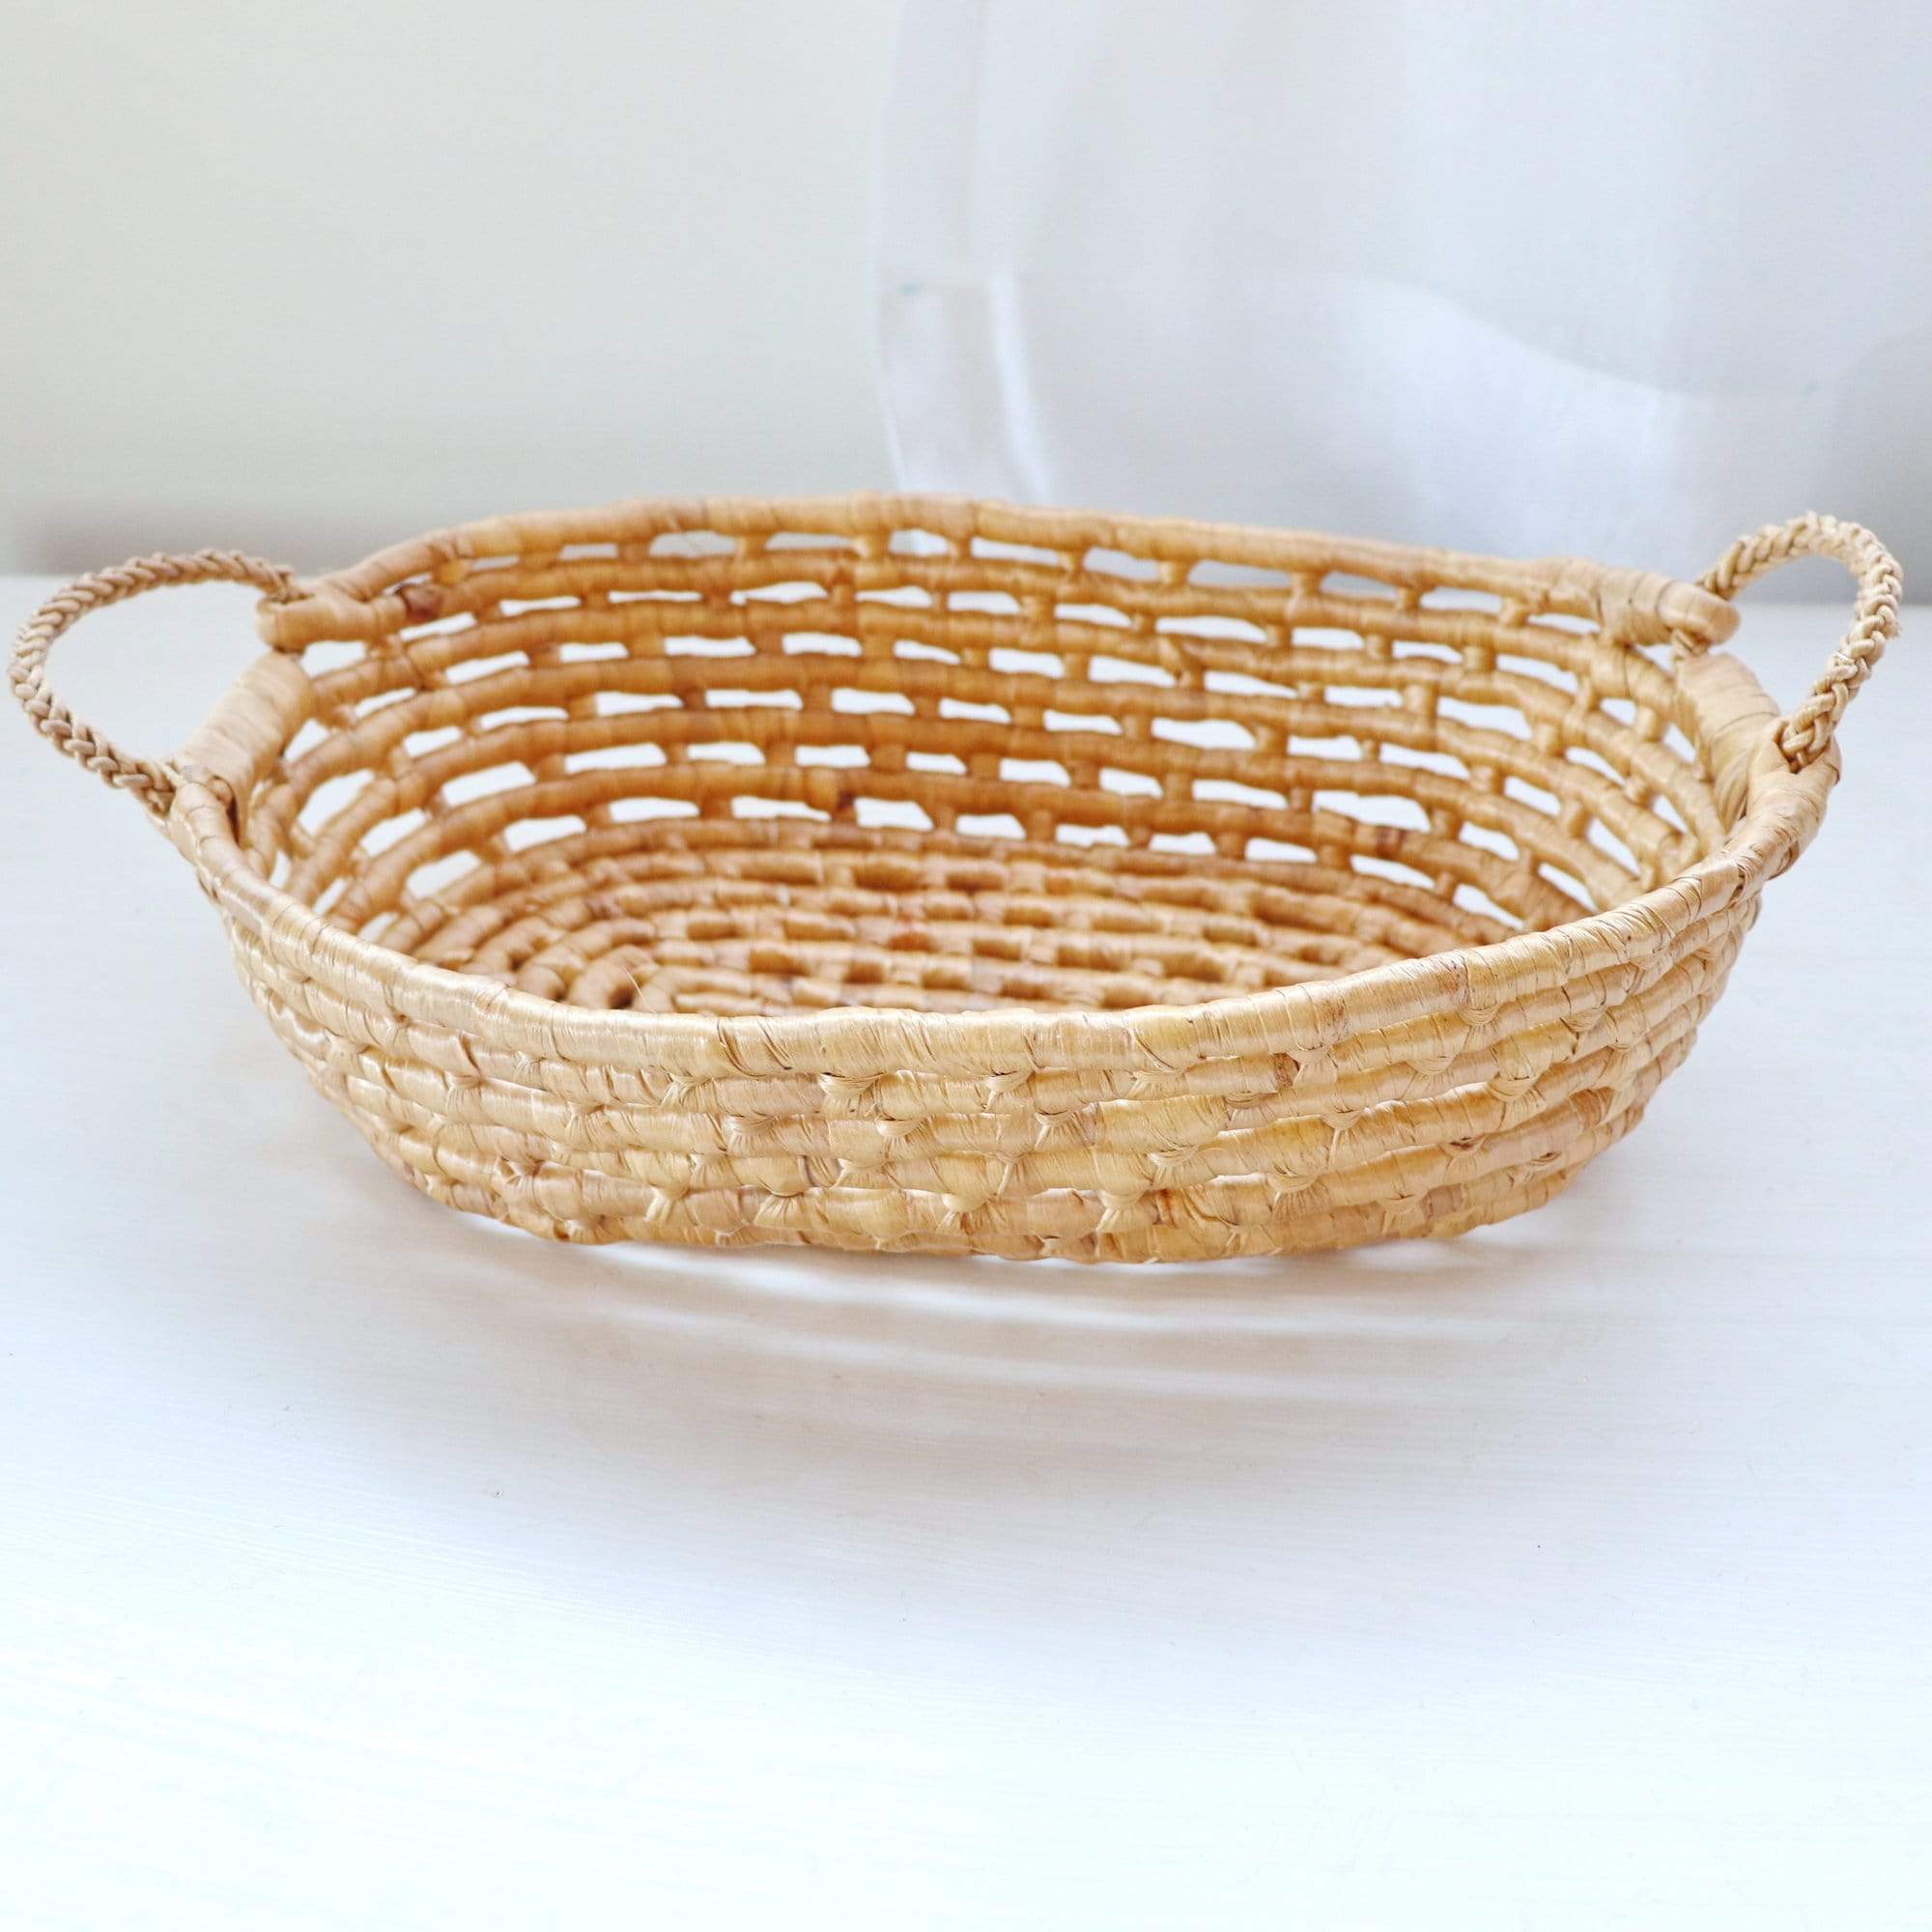 THAIHOMESHOP Baskets & Trays PASUB (ภาทรัพย์) - BREAD BASKET HANDWOVEN